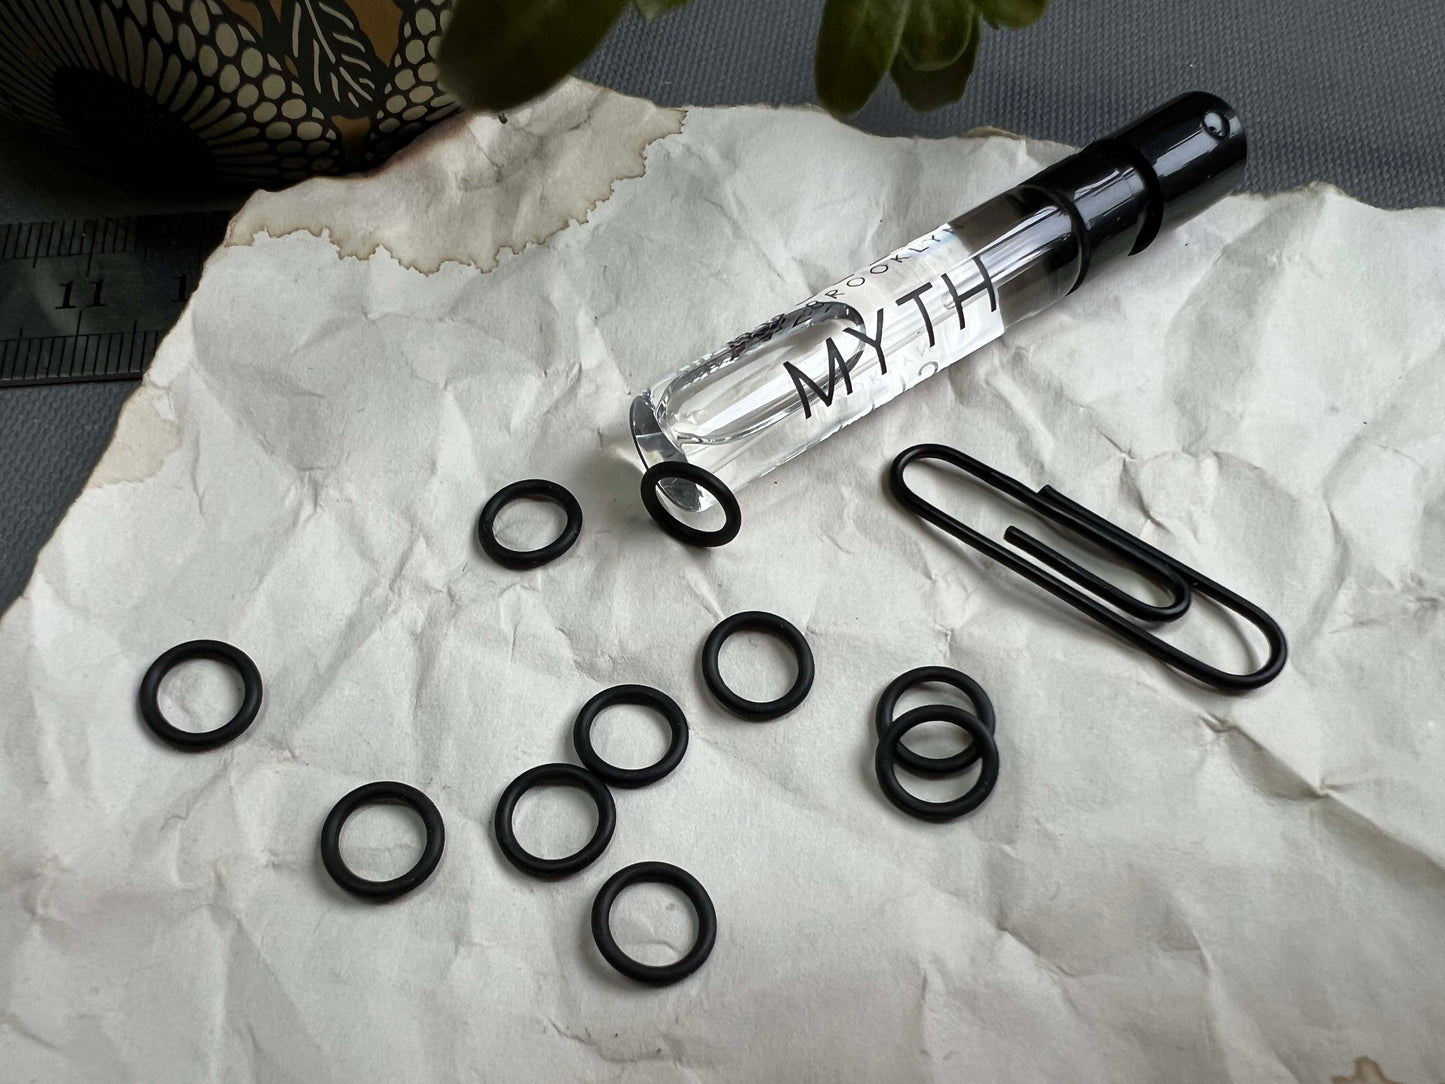 8.4mm Rubber O-Rings (ID: 6mm) - Black